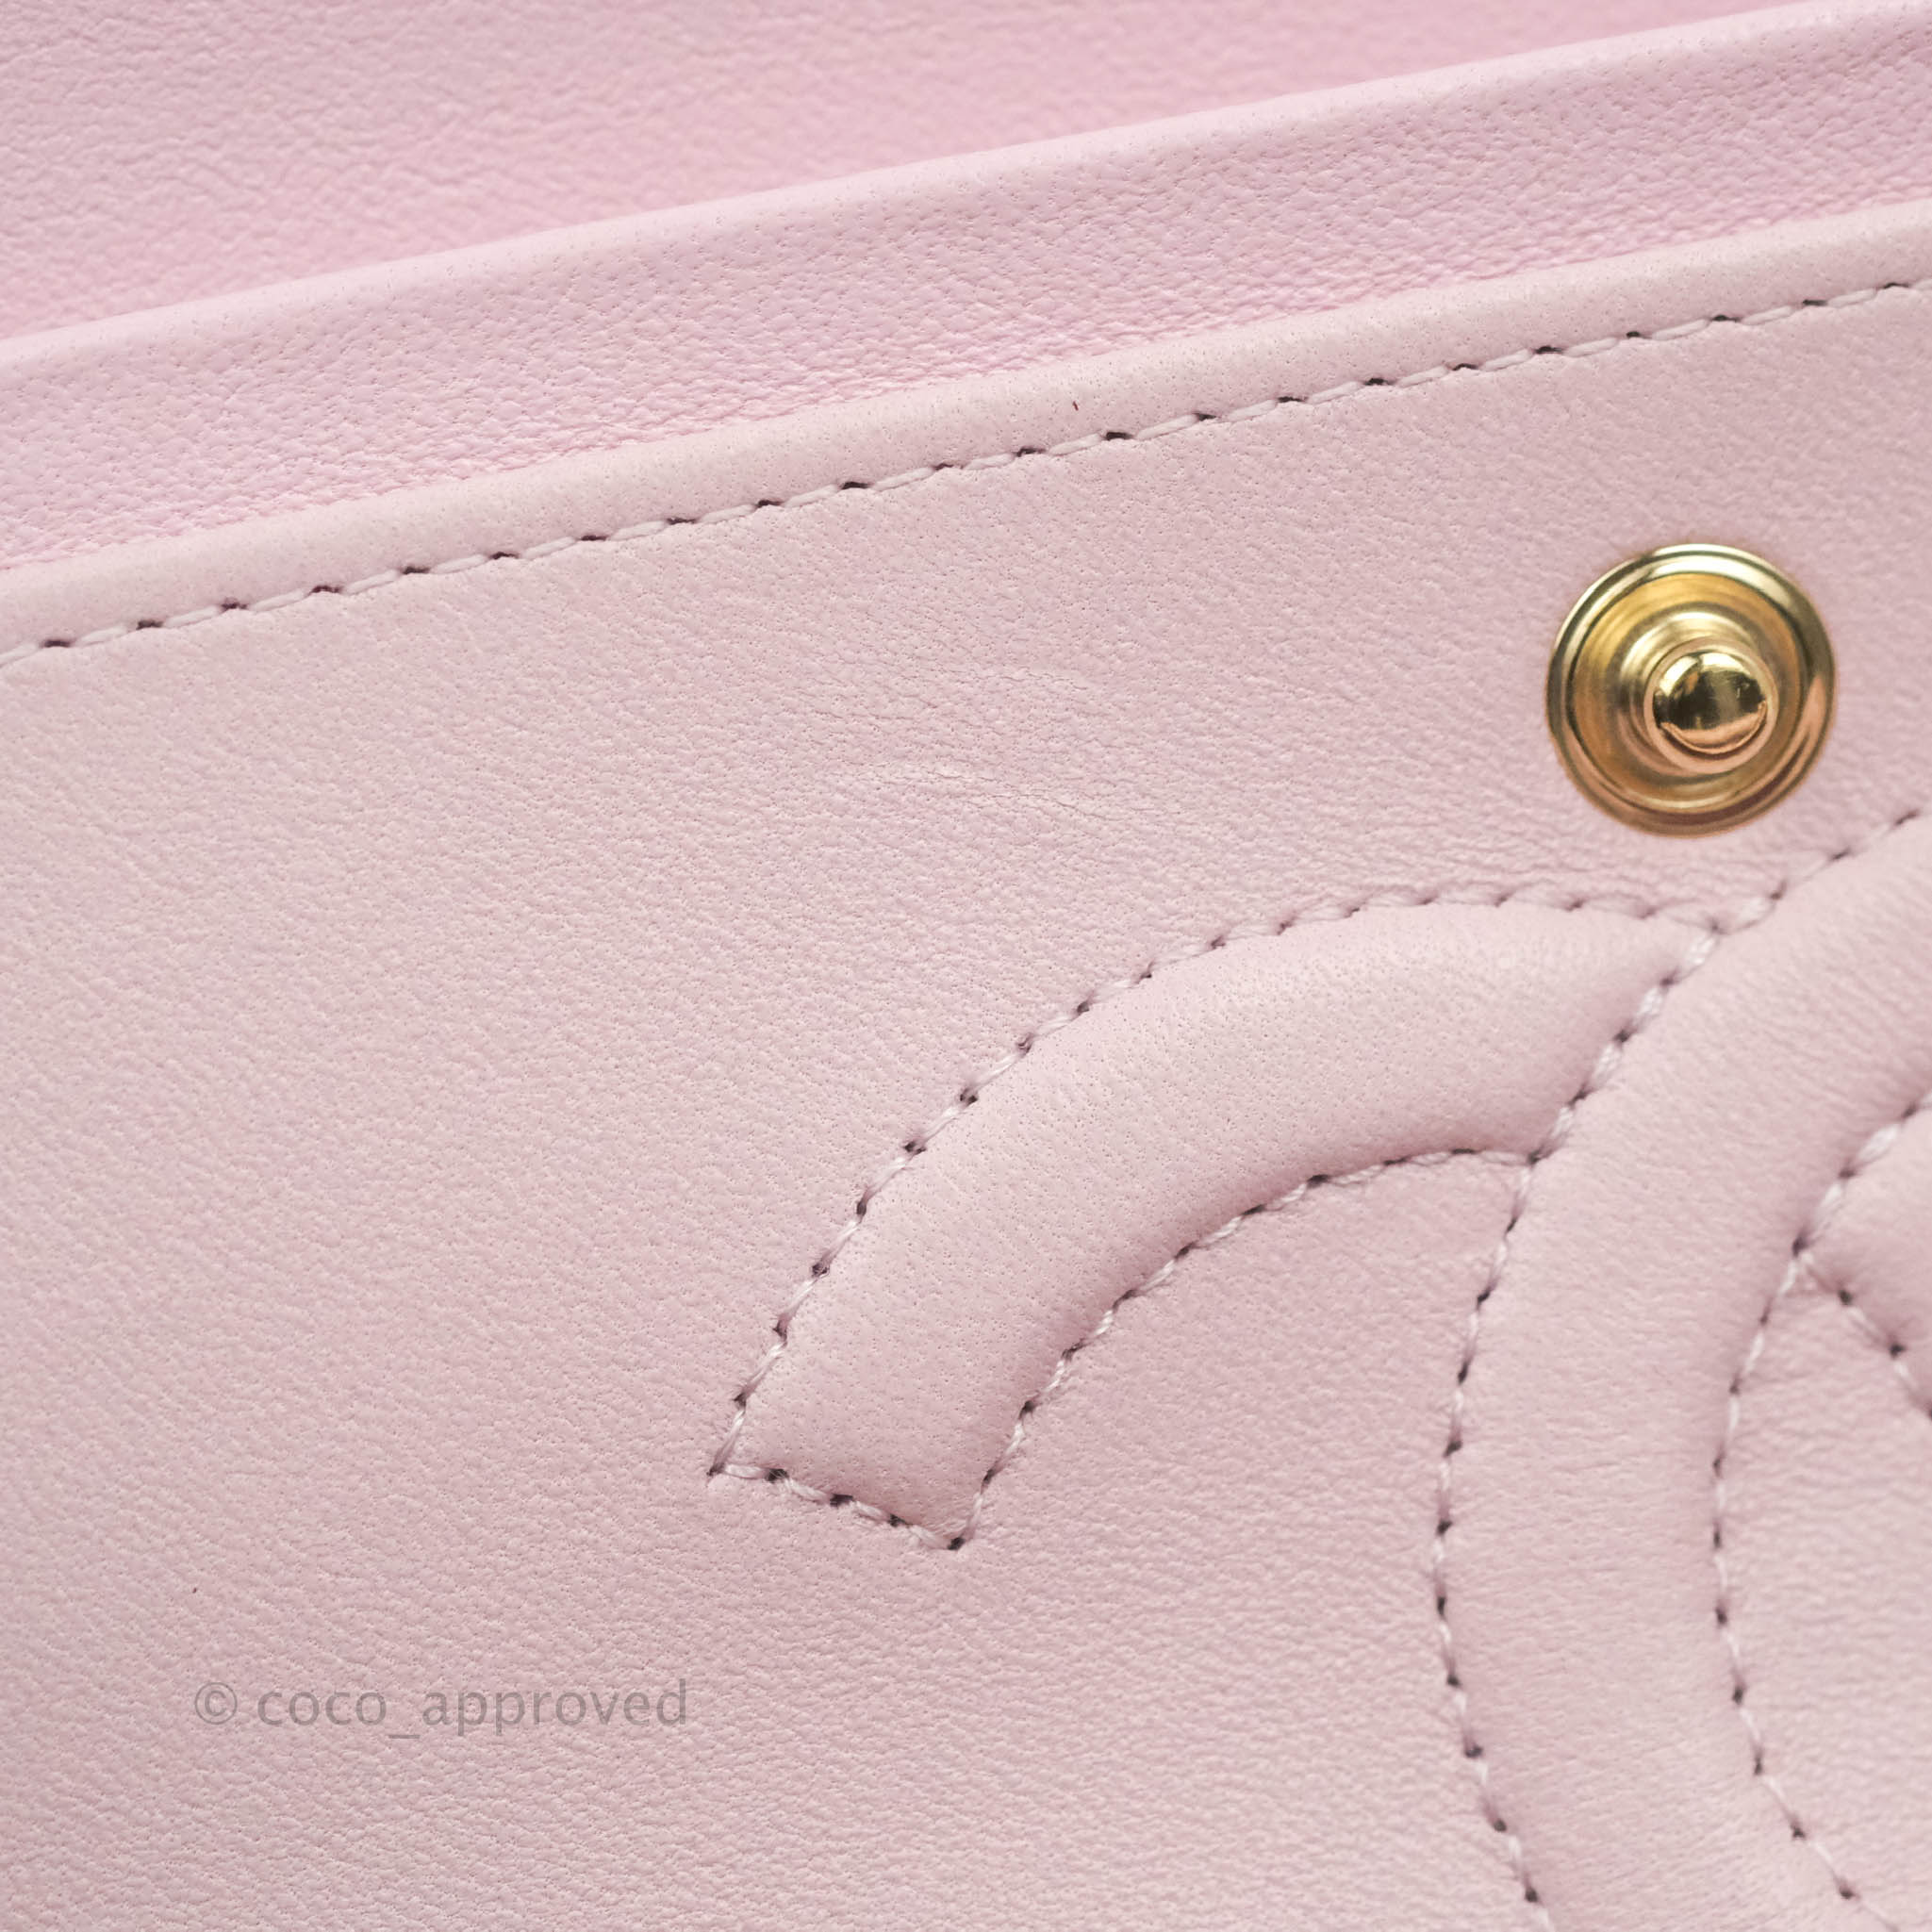 Chanel *Rare Runway* Pink Tweed Fabric & Pearls Classic Single